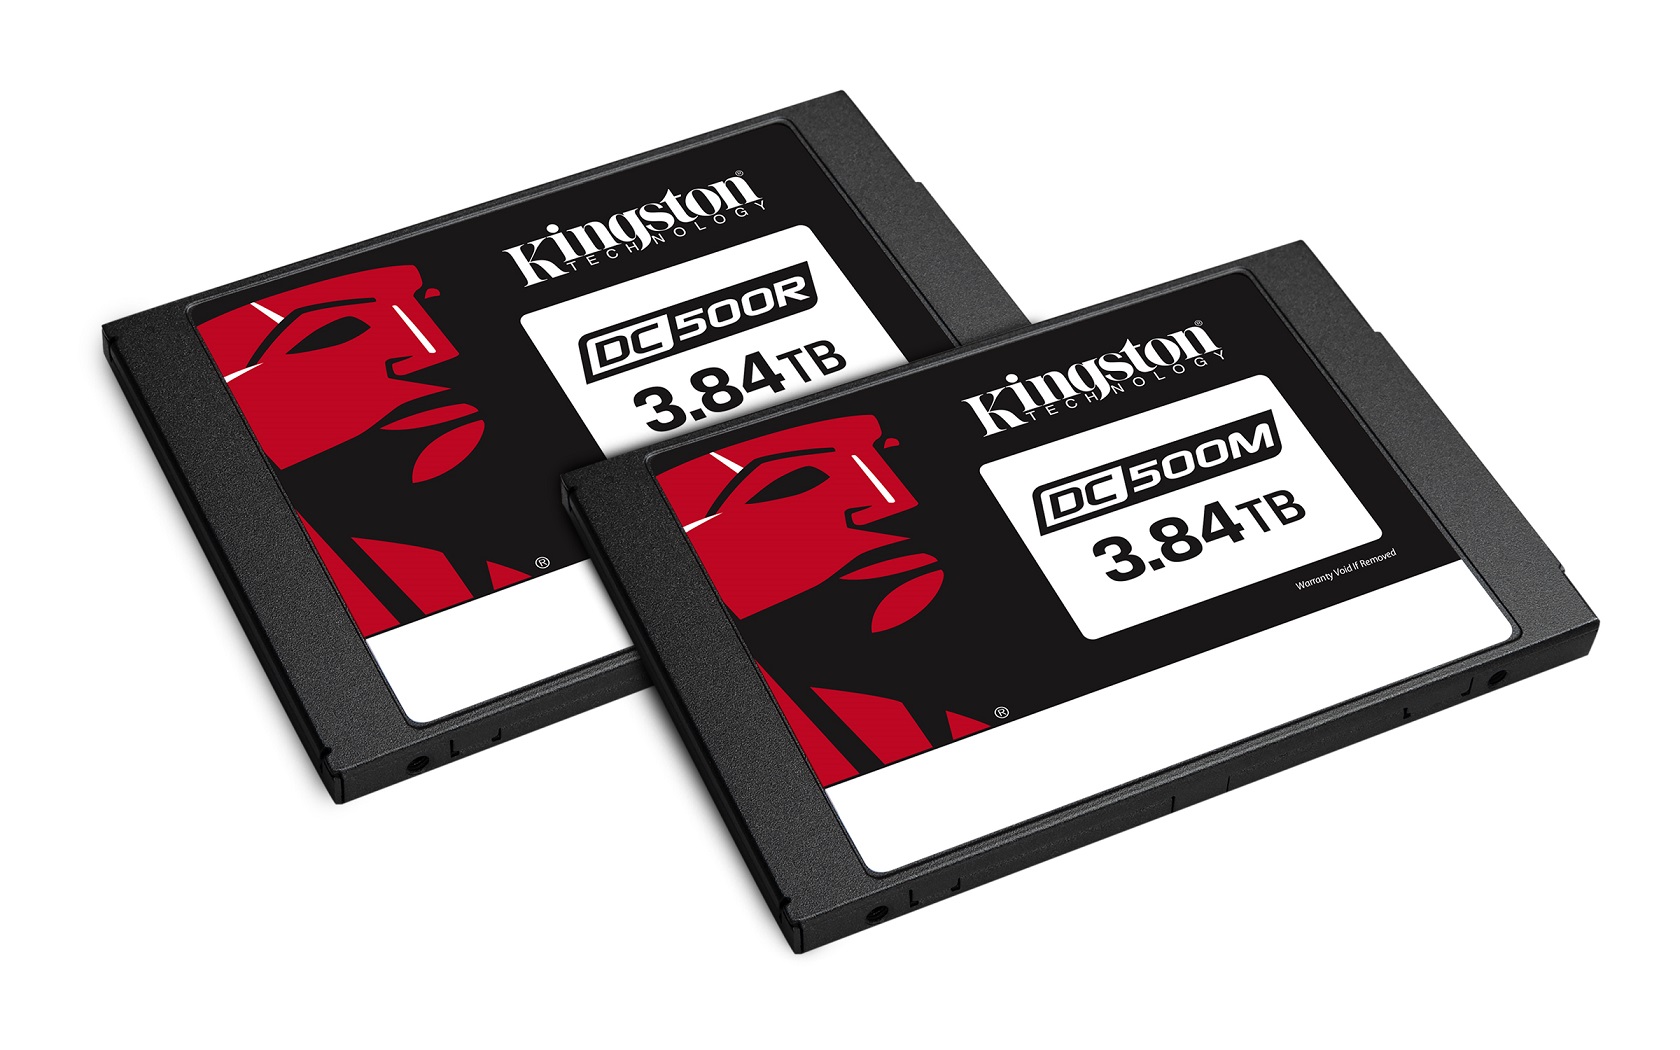 kingston dc500 series Kingston เปิดตัว SSD Data Center 500 series รุ่นใหม่ เพื่อให้เหมาะกับงานที่เน้นการอ่านและงานที่หลากหลาย